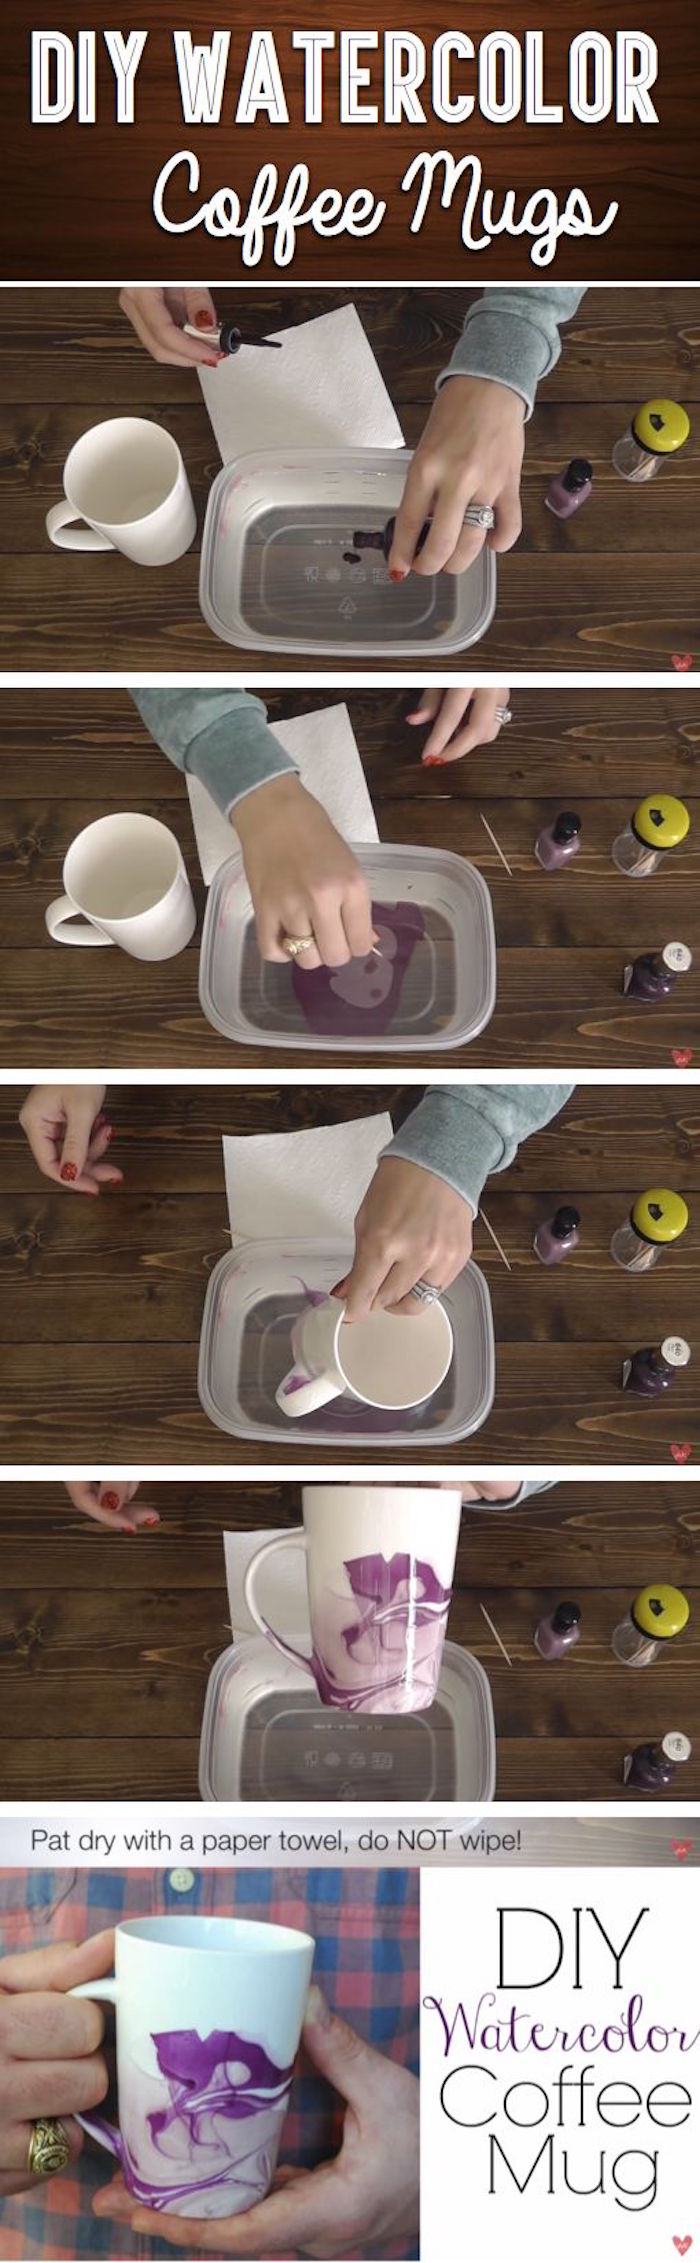 DIY, kreative Idee, Tasse mit Nagellack in Lila bemalen